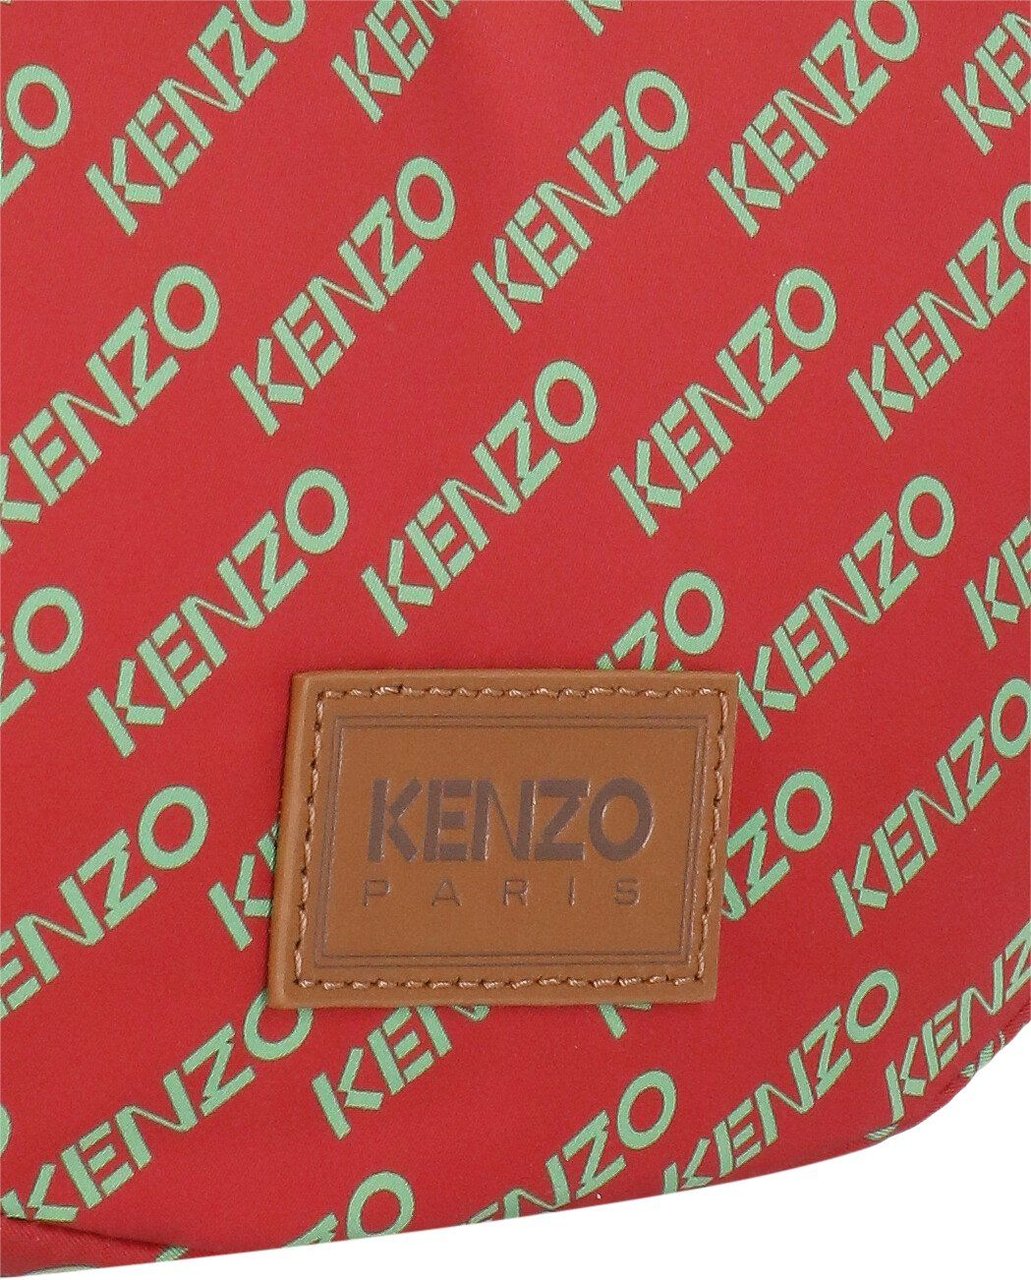 Kenzo Bags Medium Red Rood